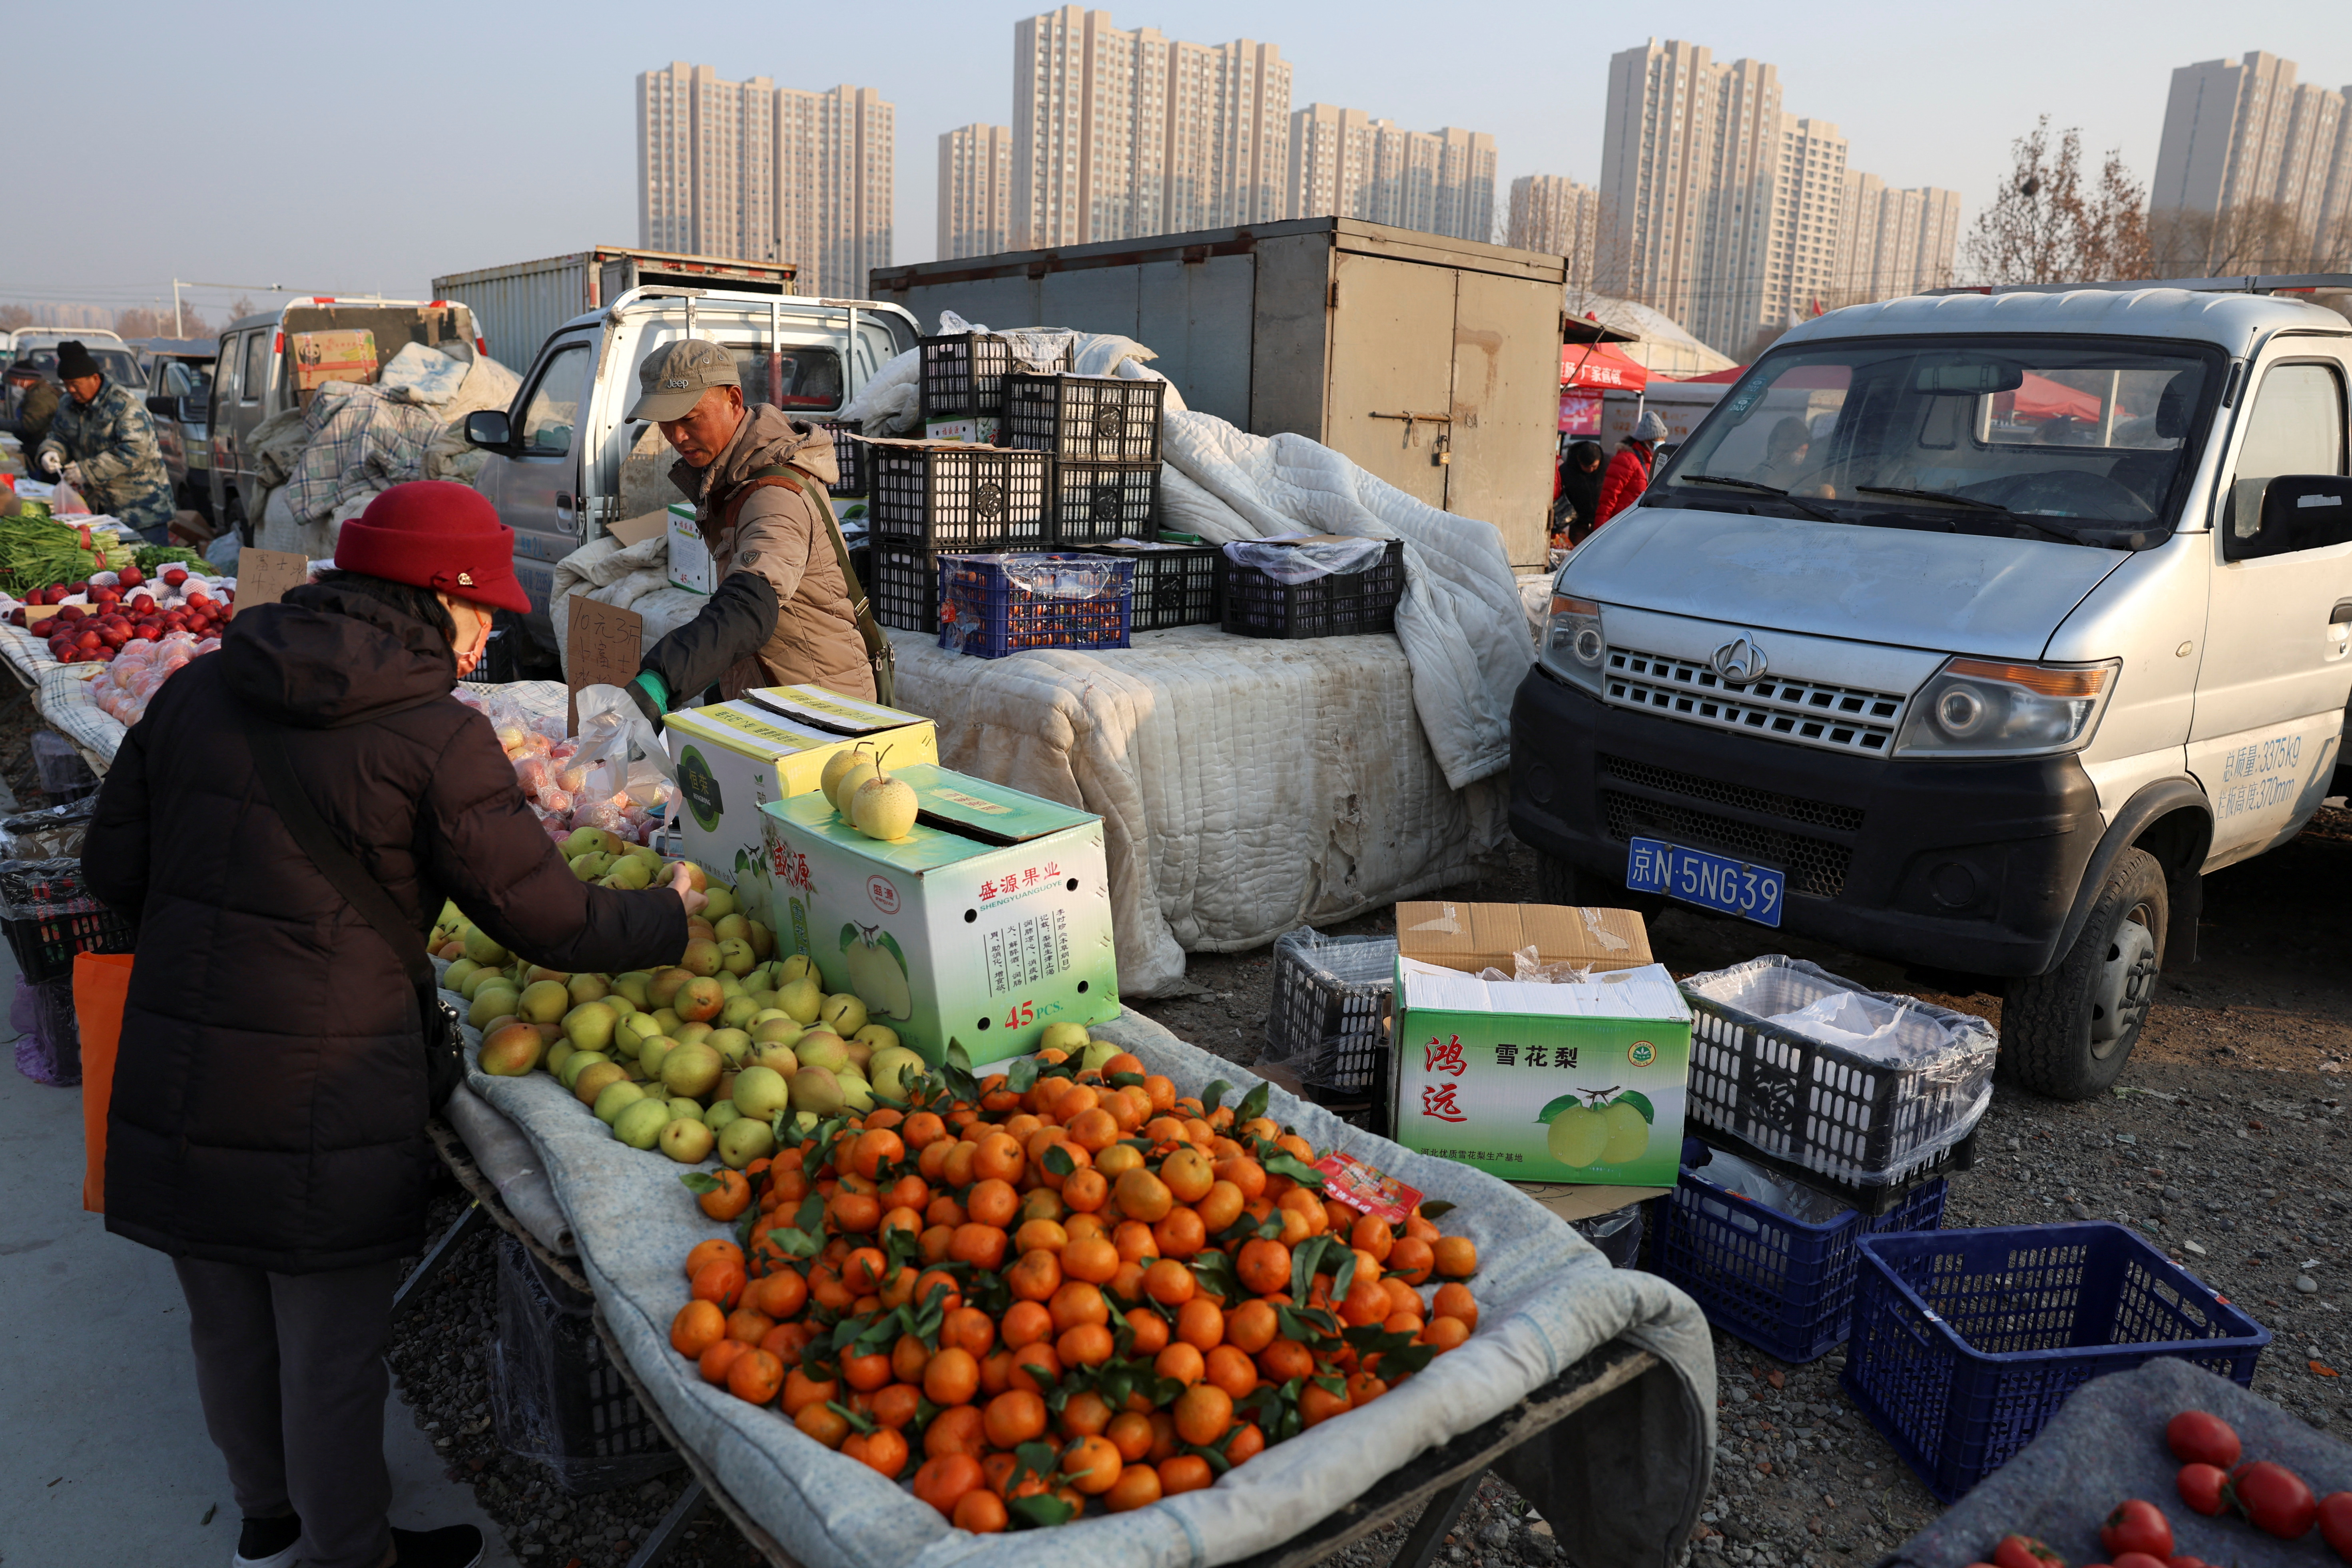 Vegetable vendor at market in Beijing